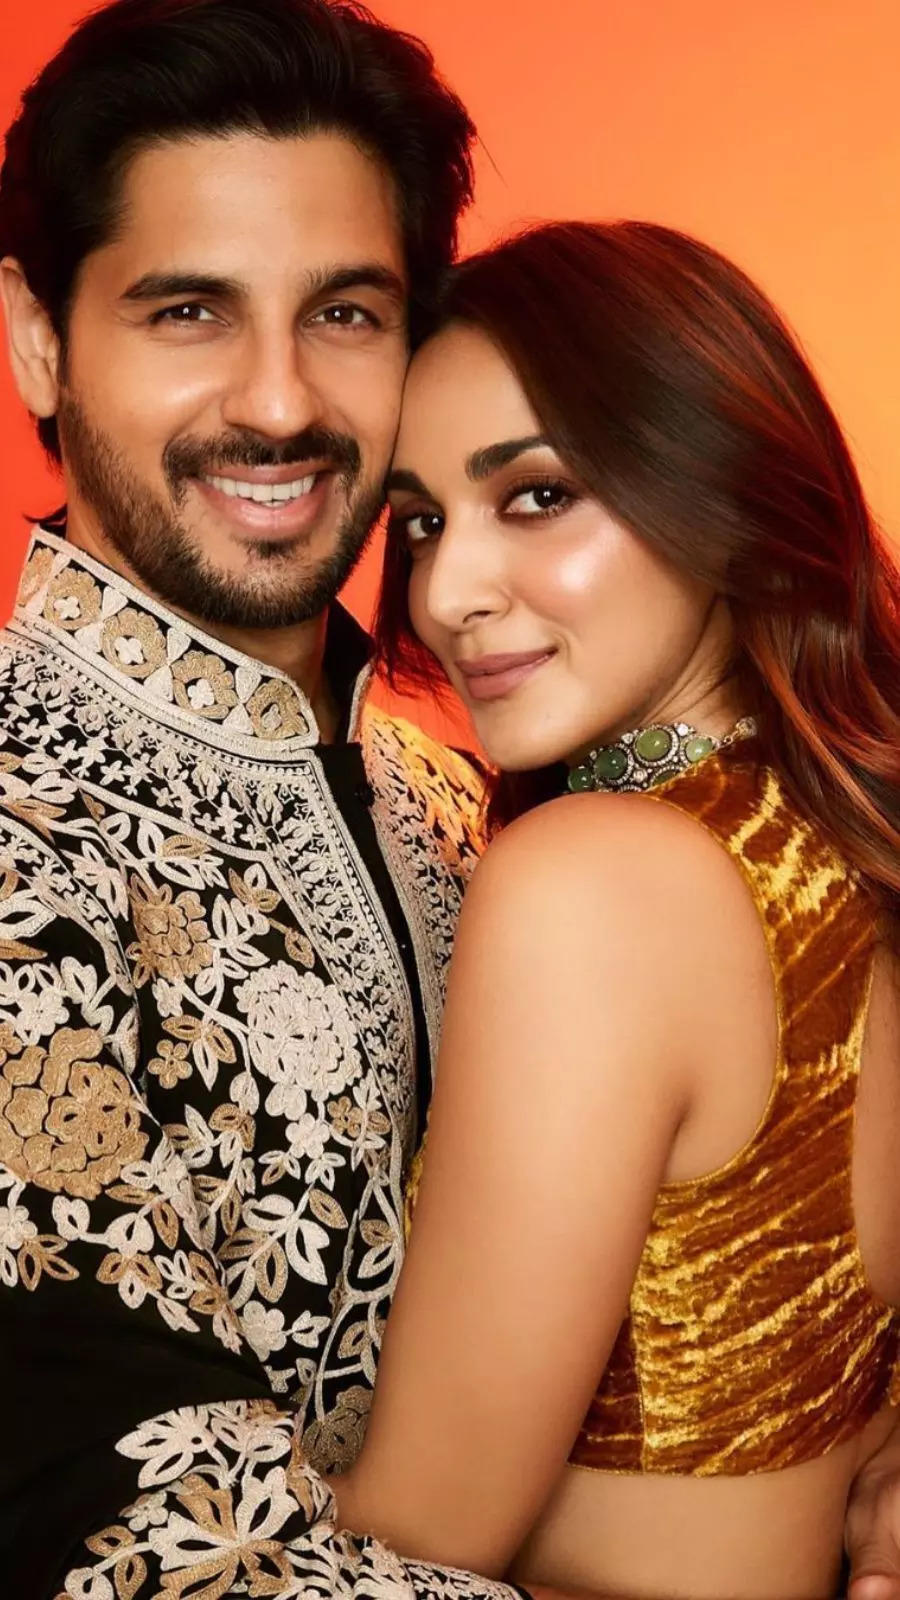 Premium AI Image | Indian woman Diwali festival sopping couple poses